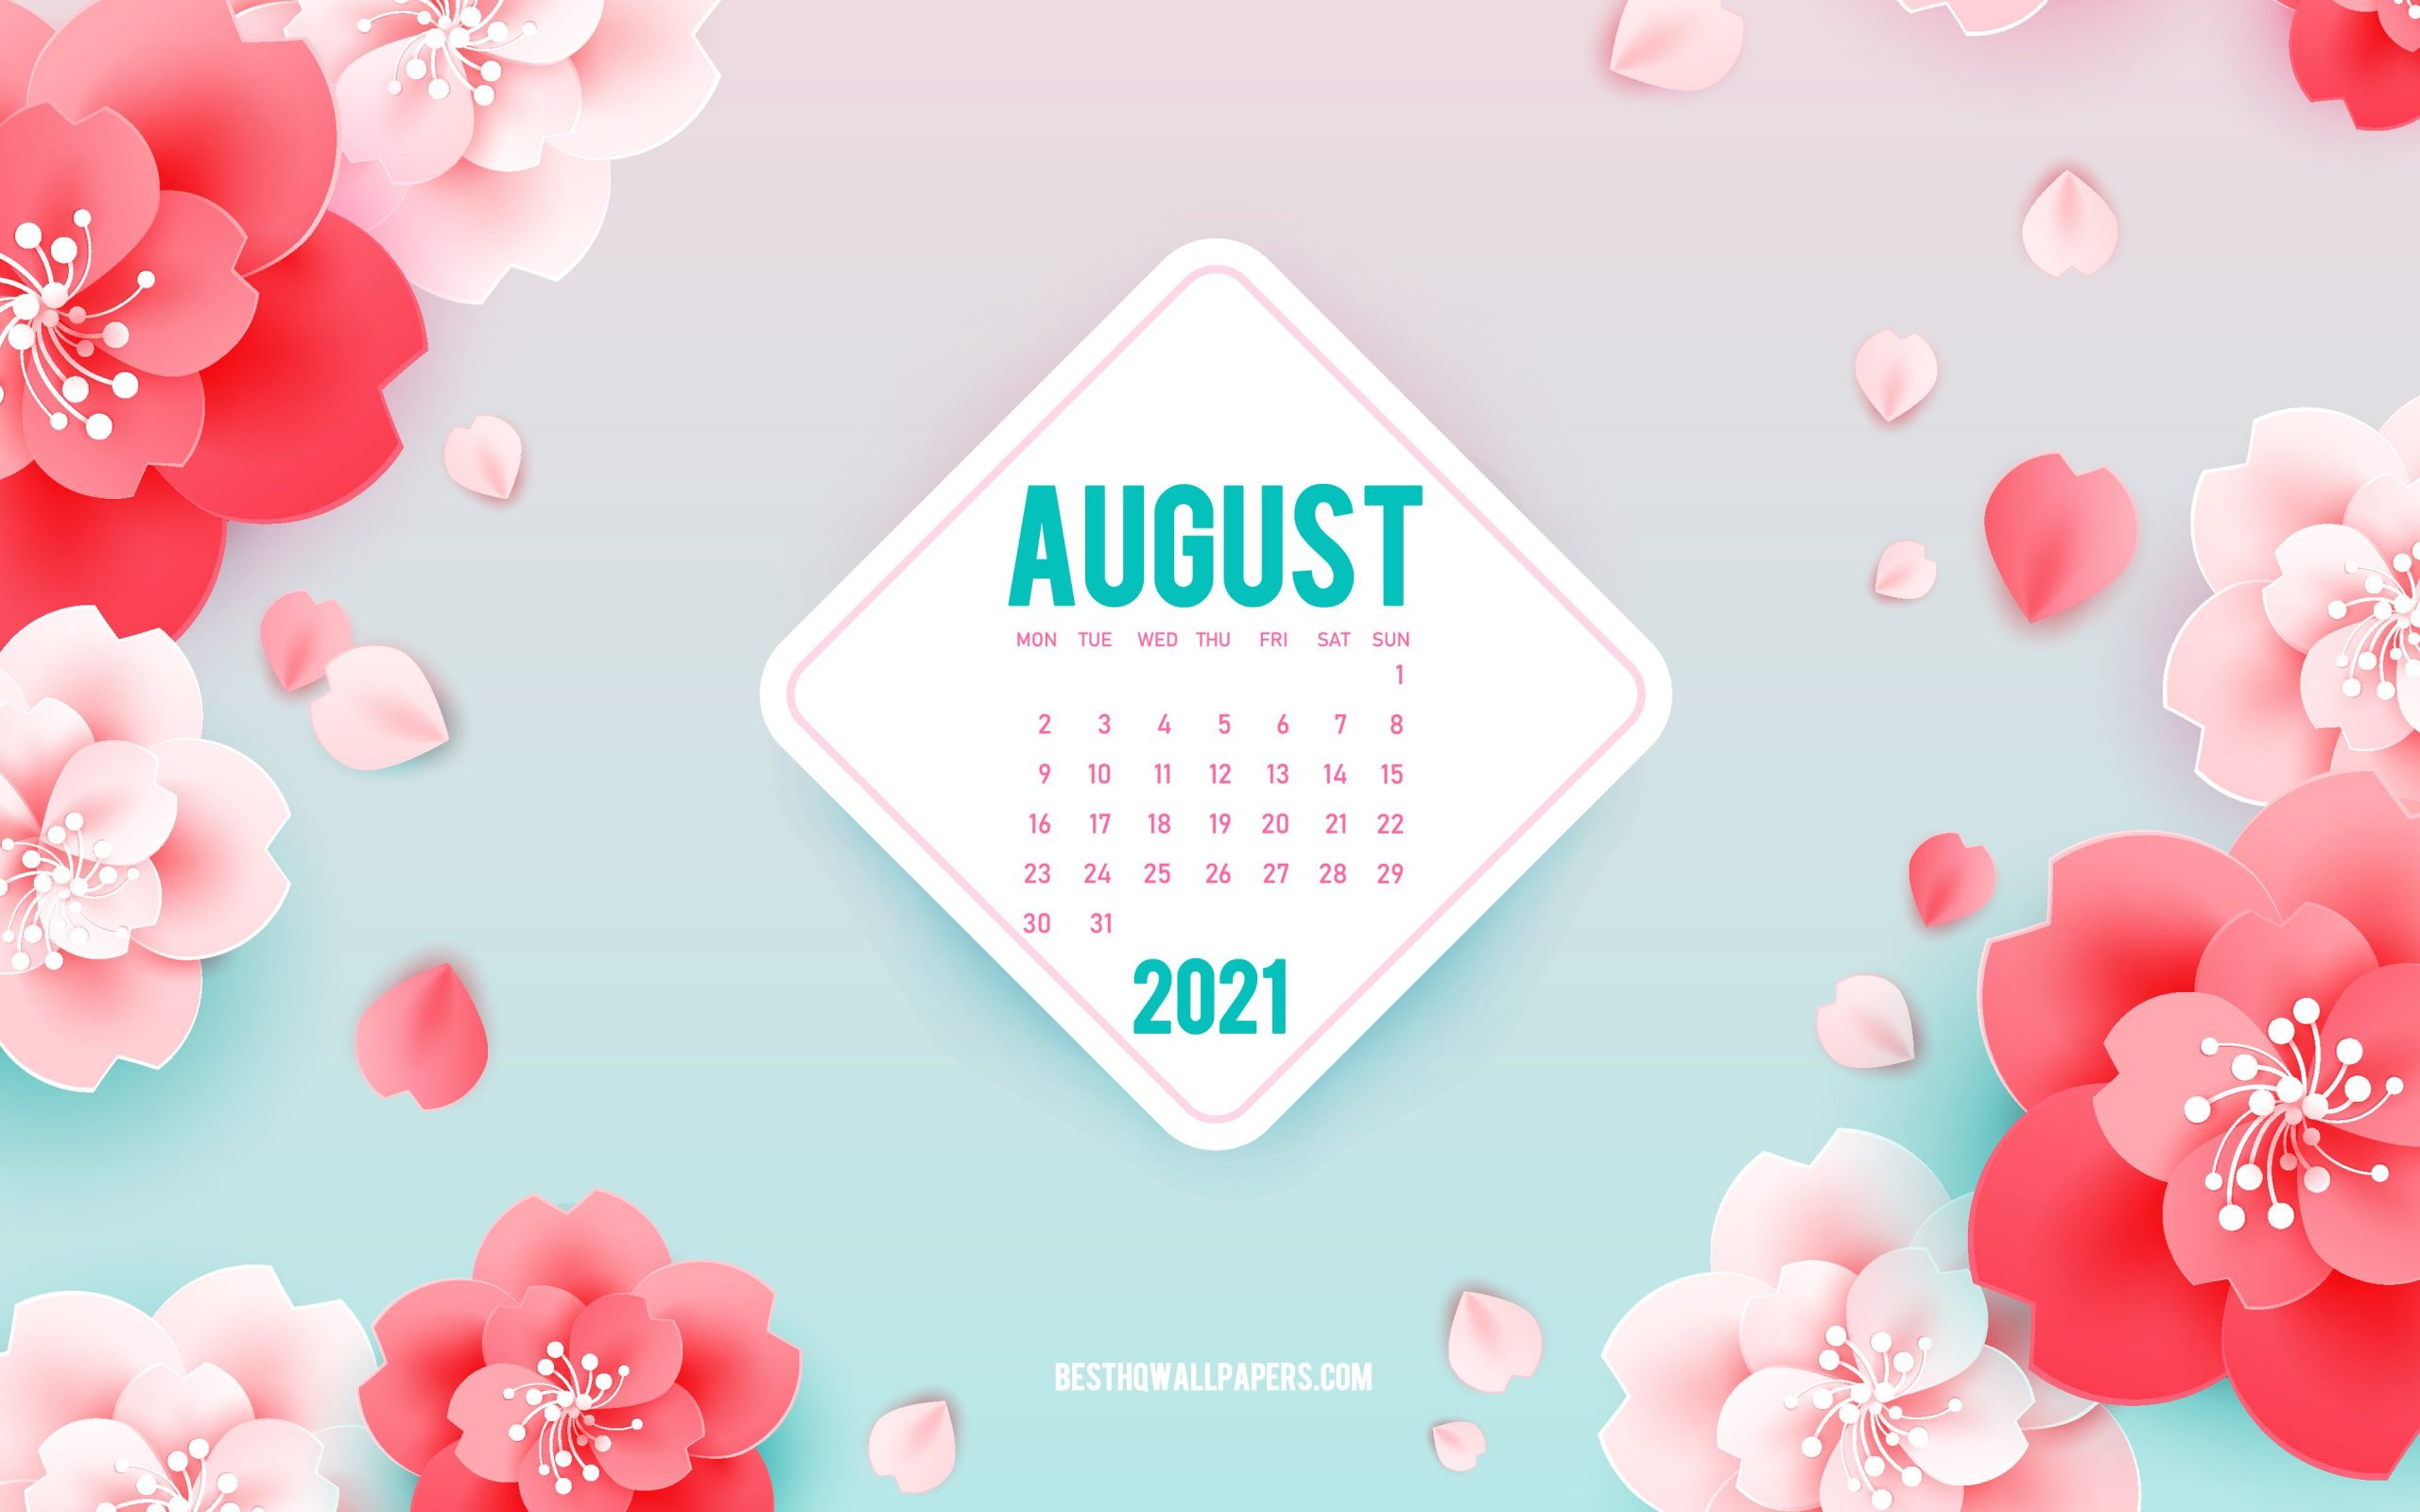 August 2021 Calendar Wallpapers HD Free Download 